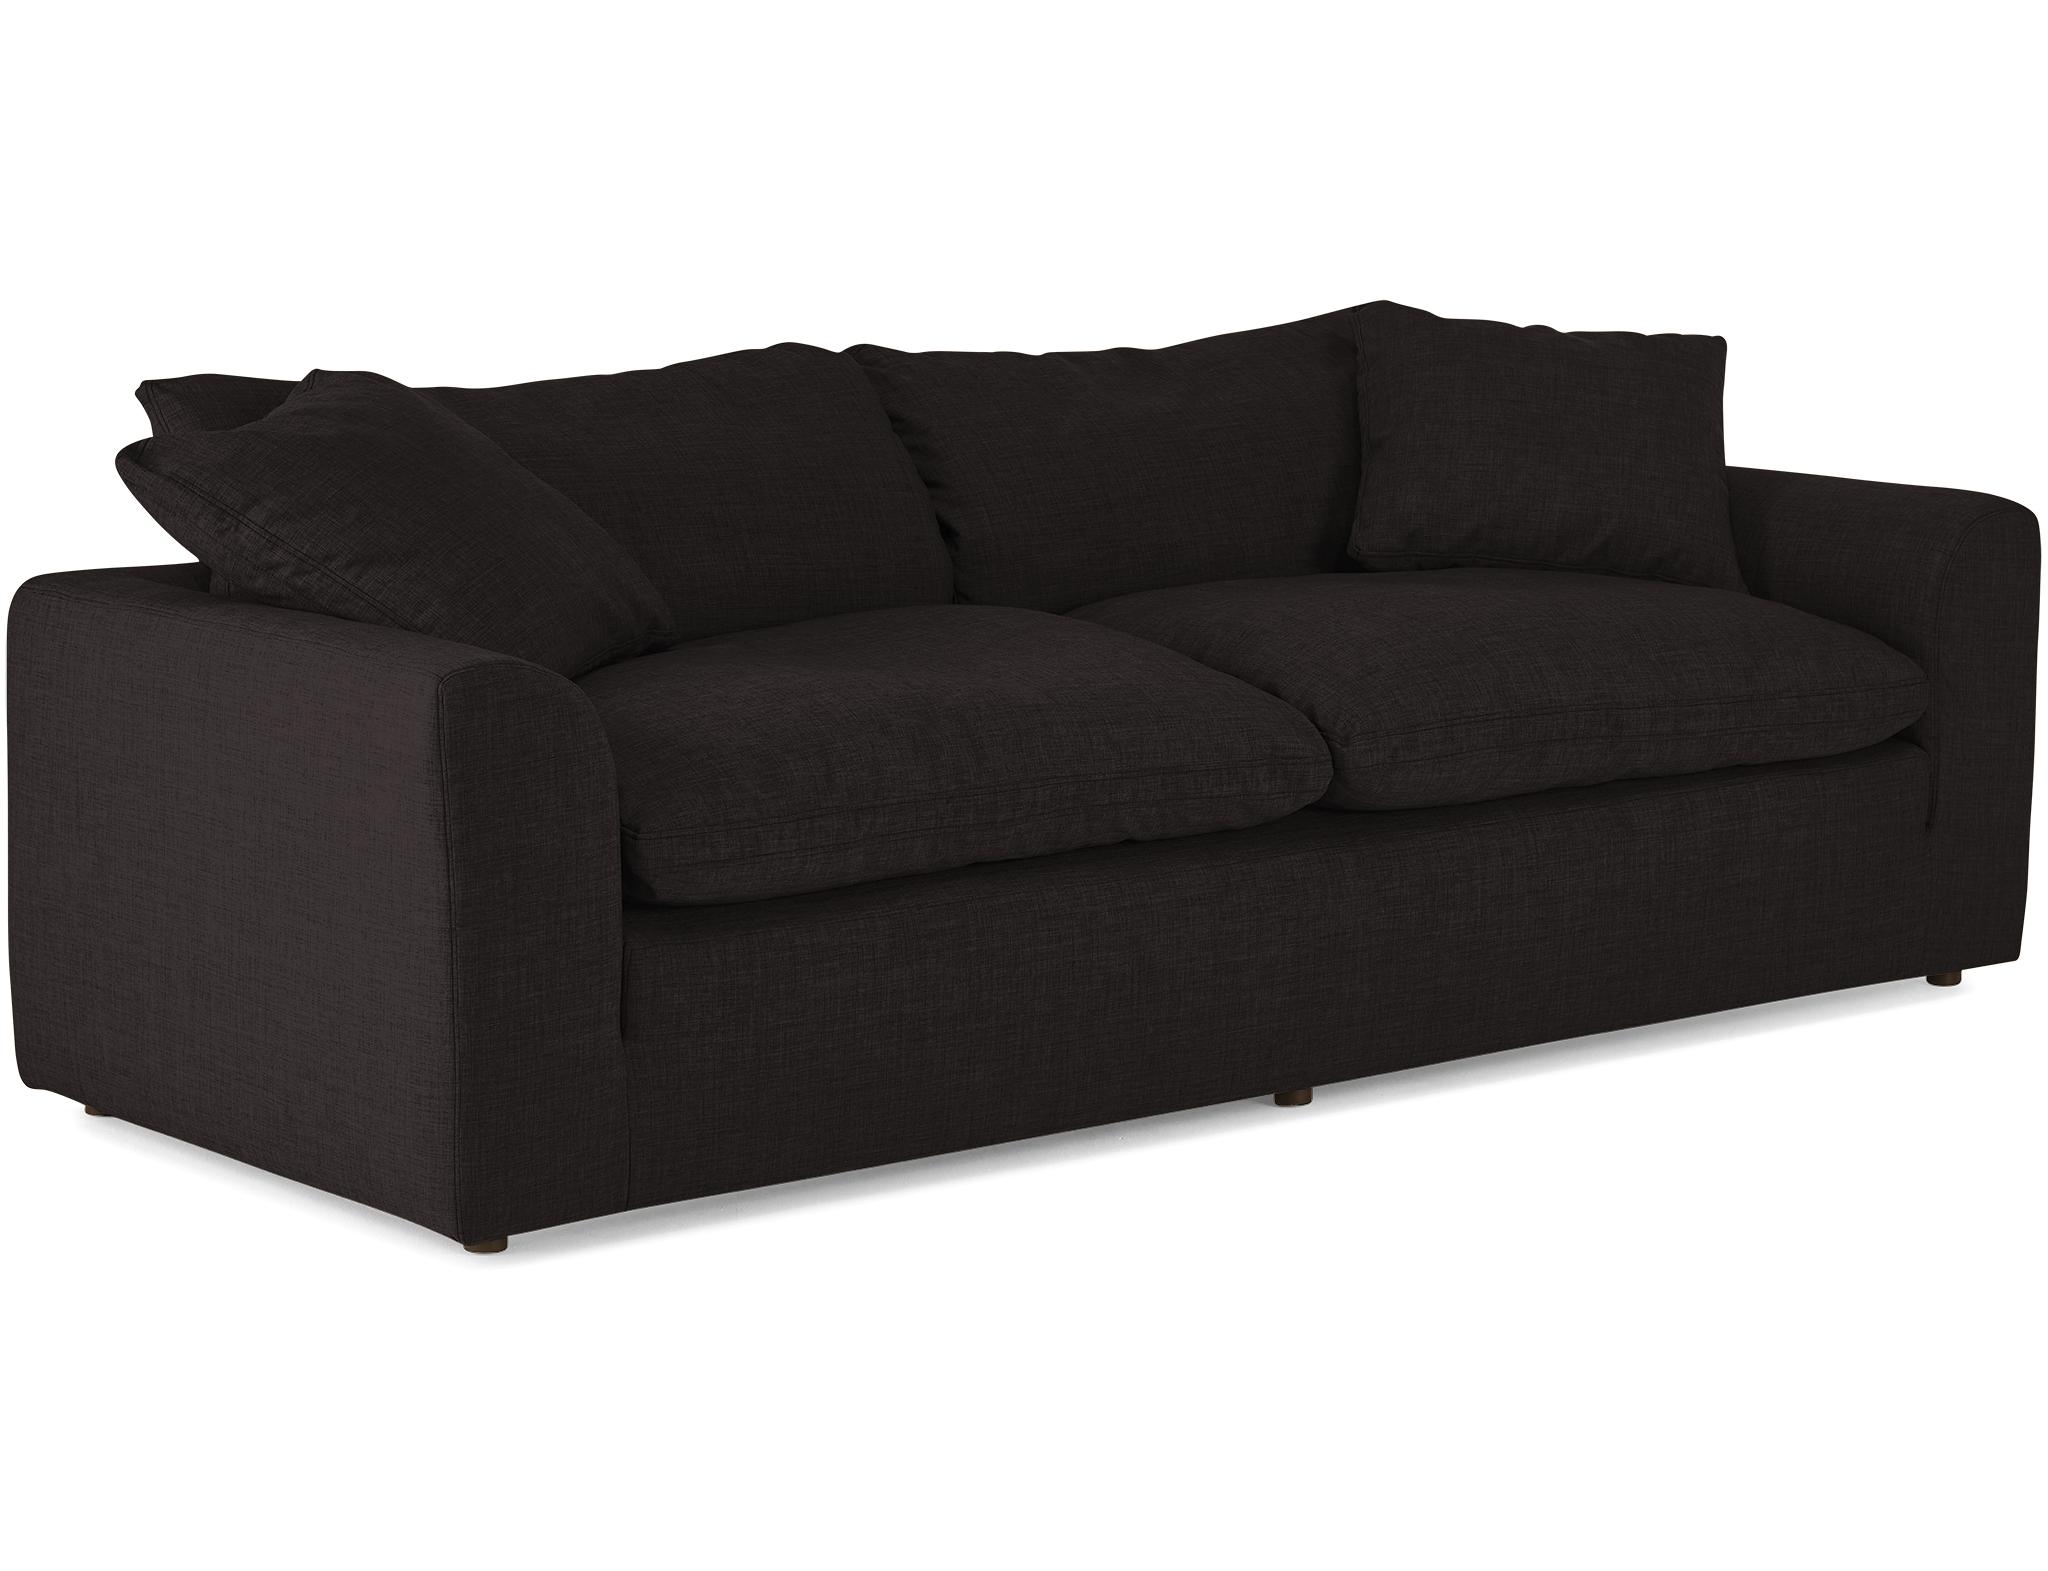 Gray Bryant Mid Century Modern Sofa - Bentley Pewter - Image 1